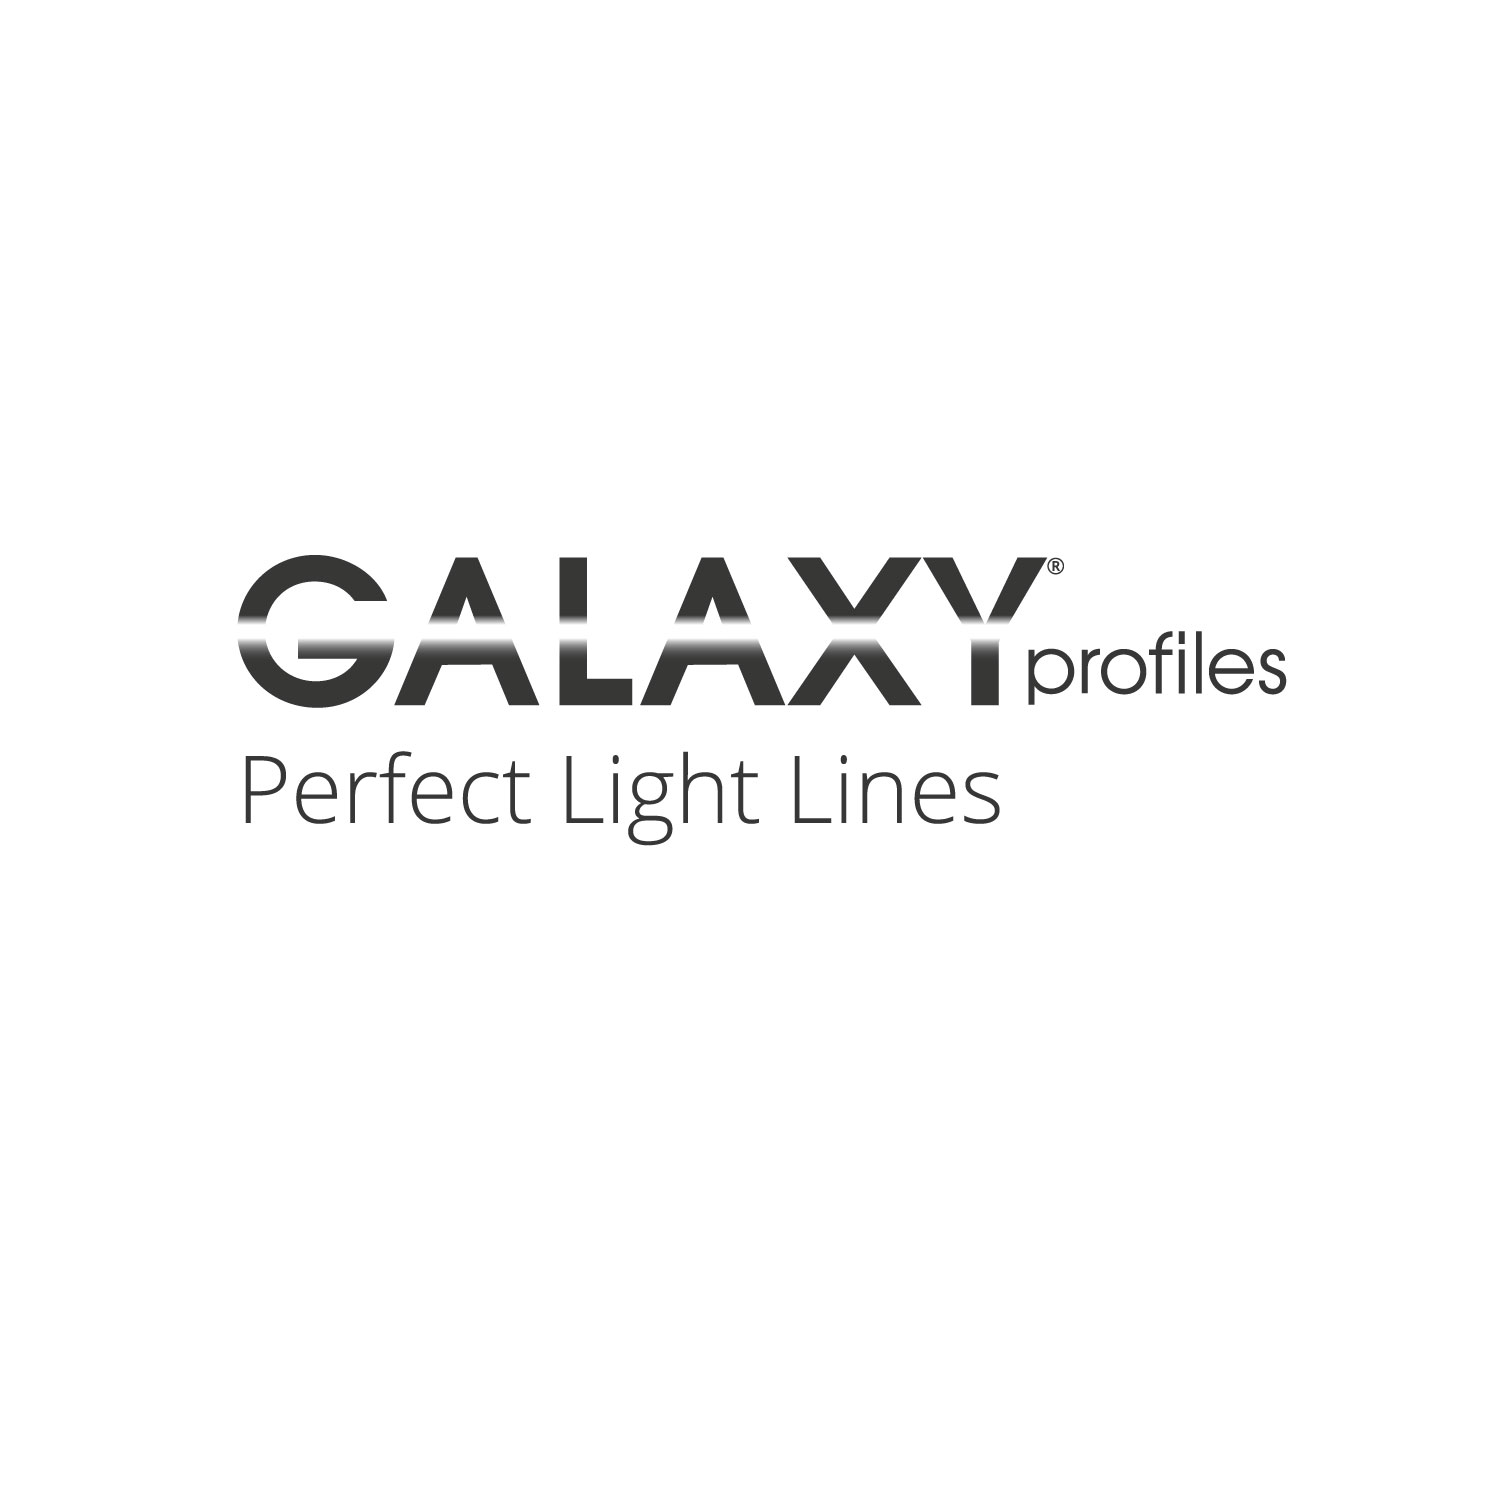 GALAXY® profiles - Katalog 2022/2023 - English - German